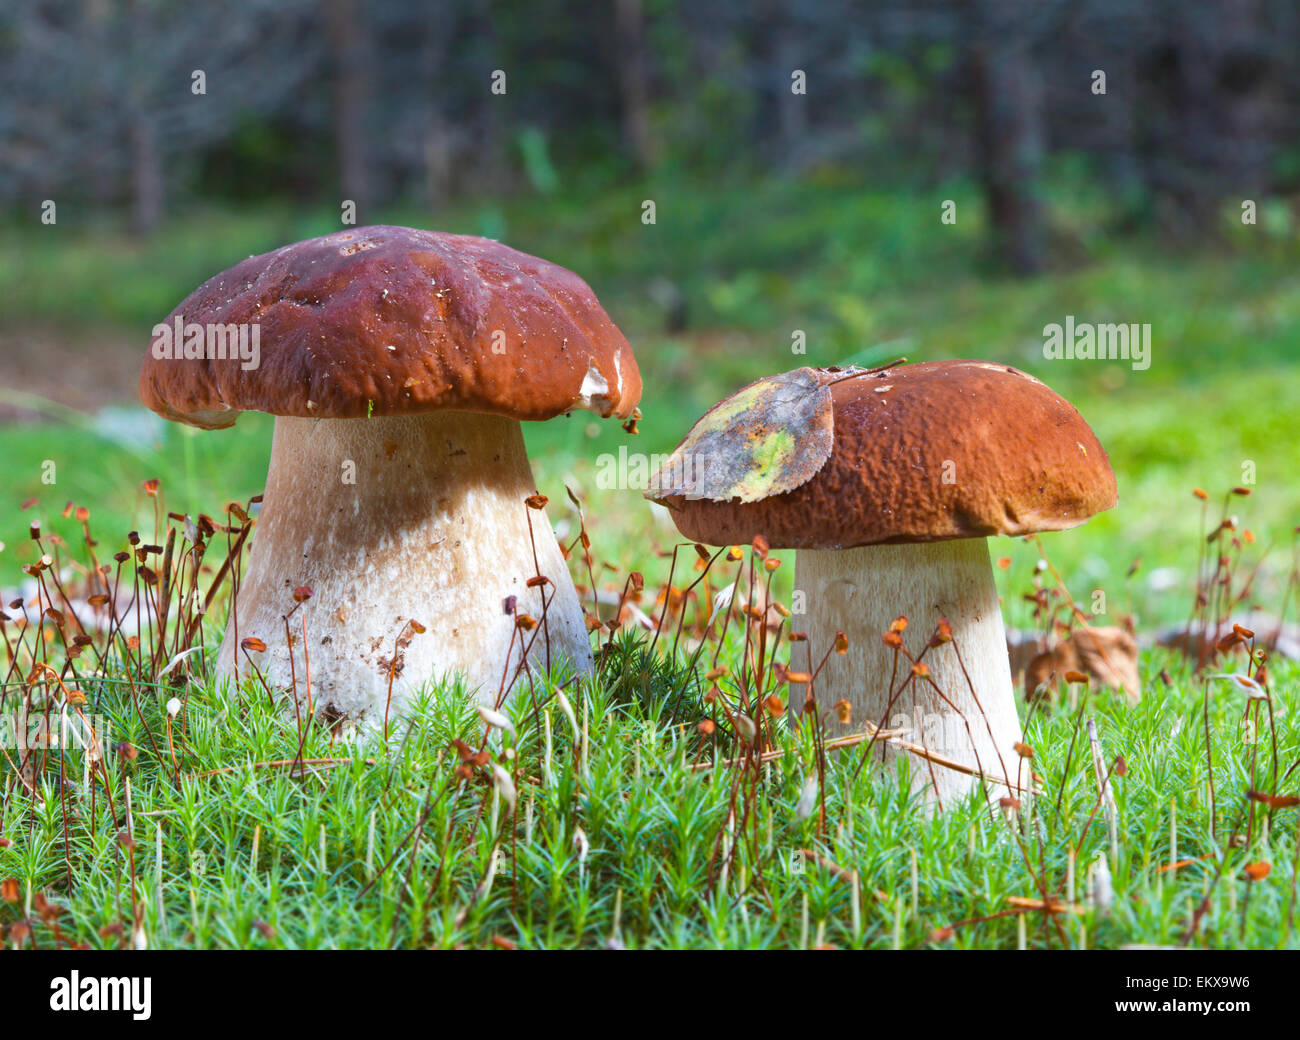 Porcini mushroom (Boletus edulis) Stock Photo